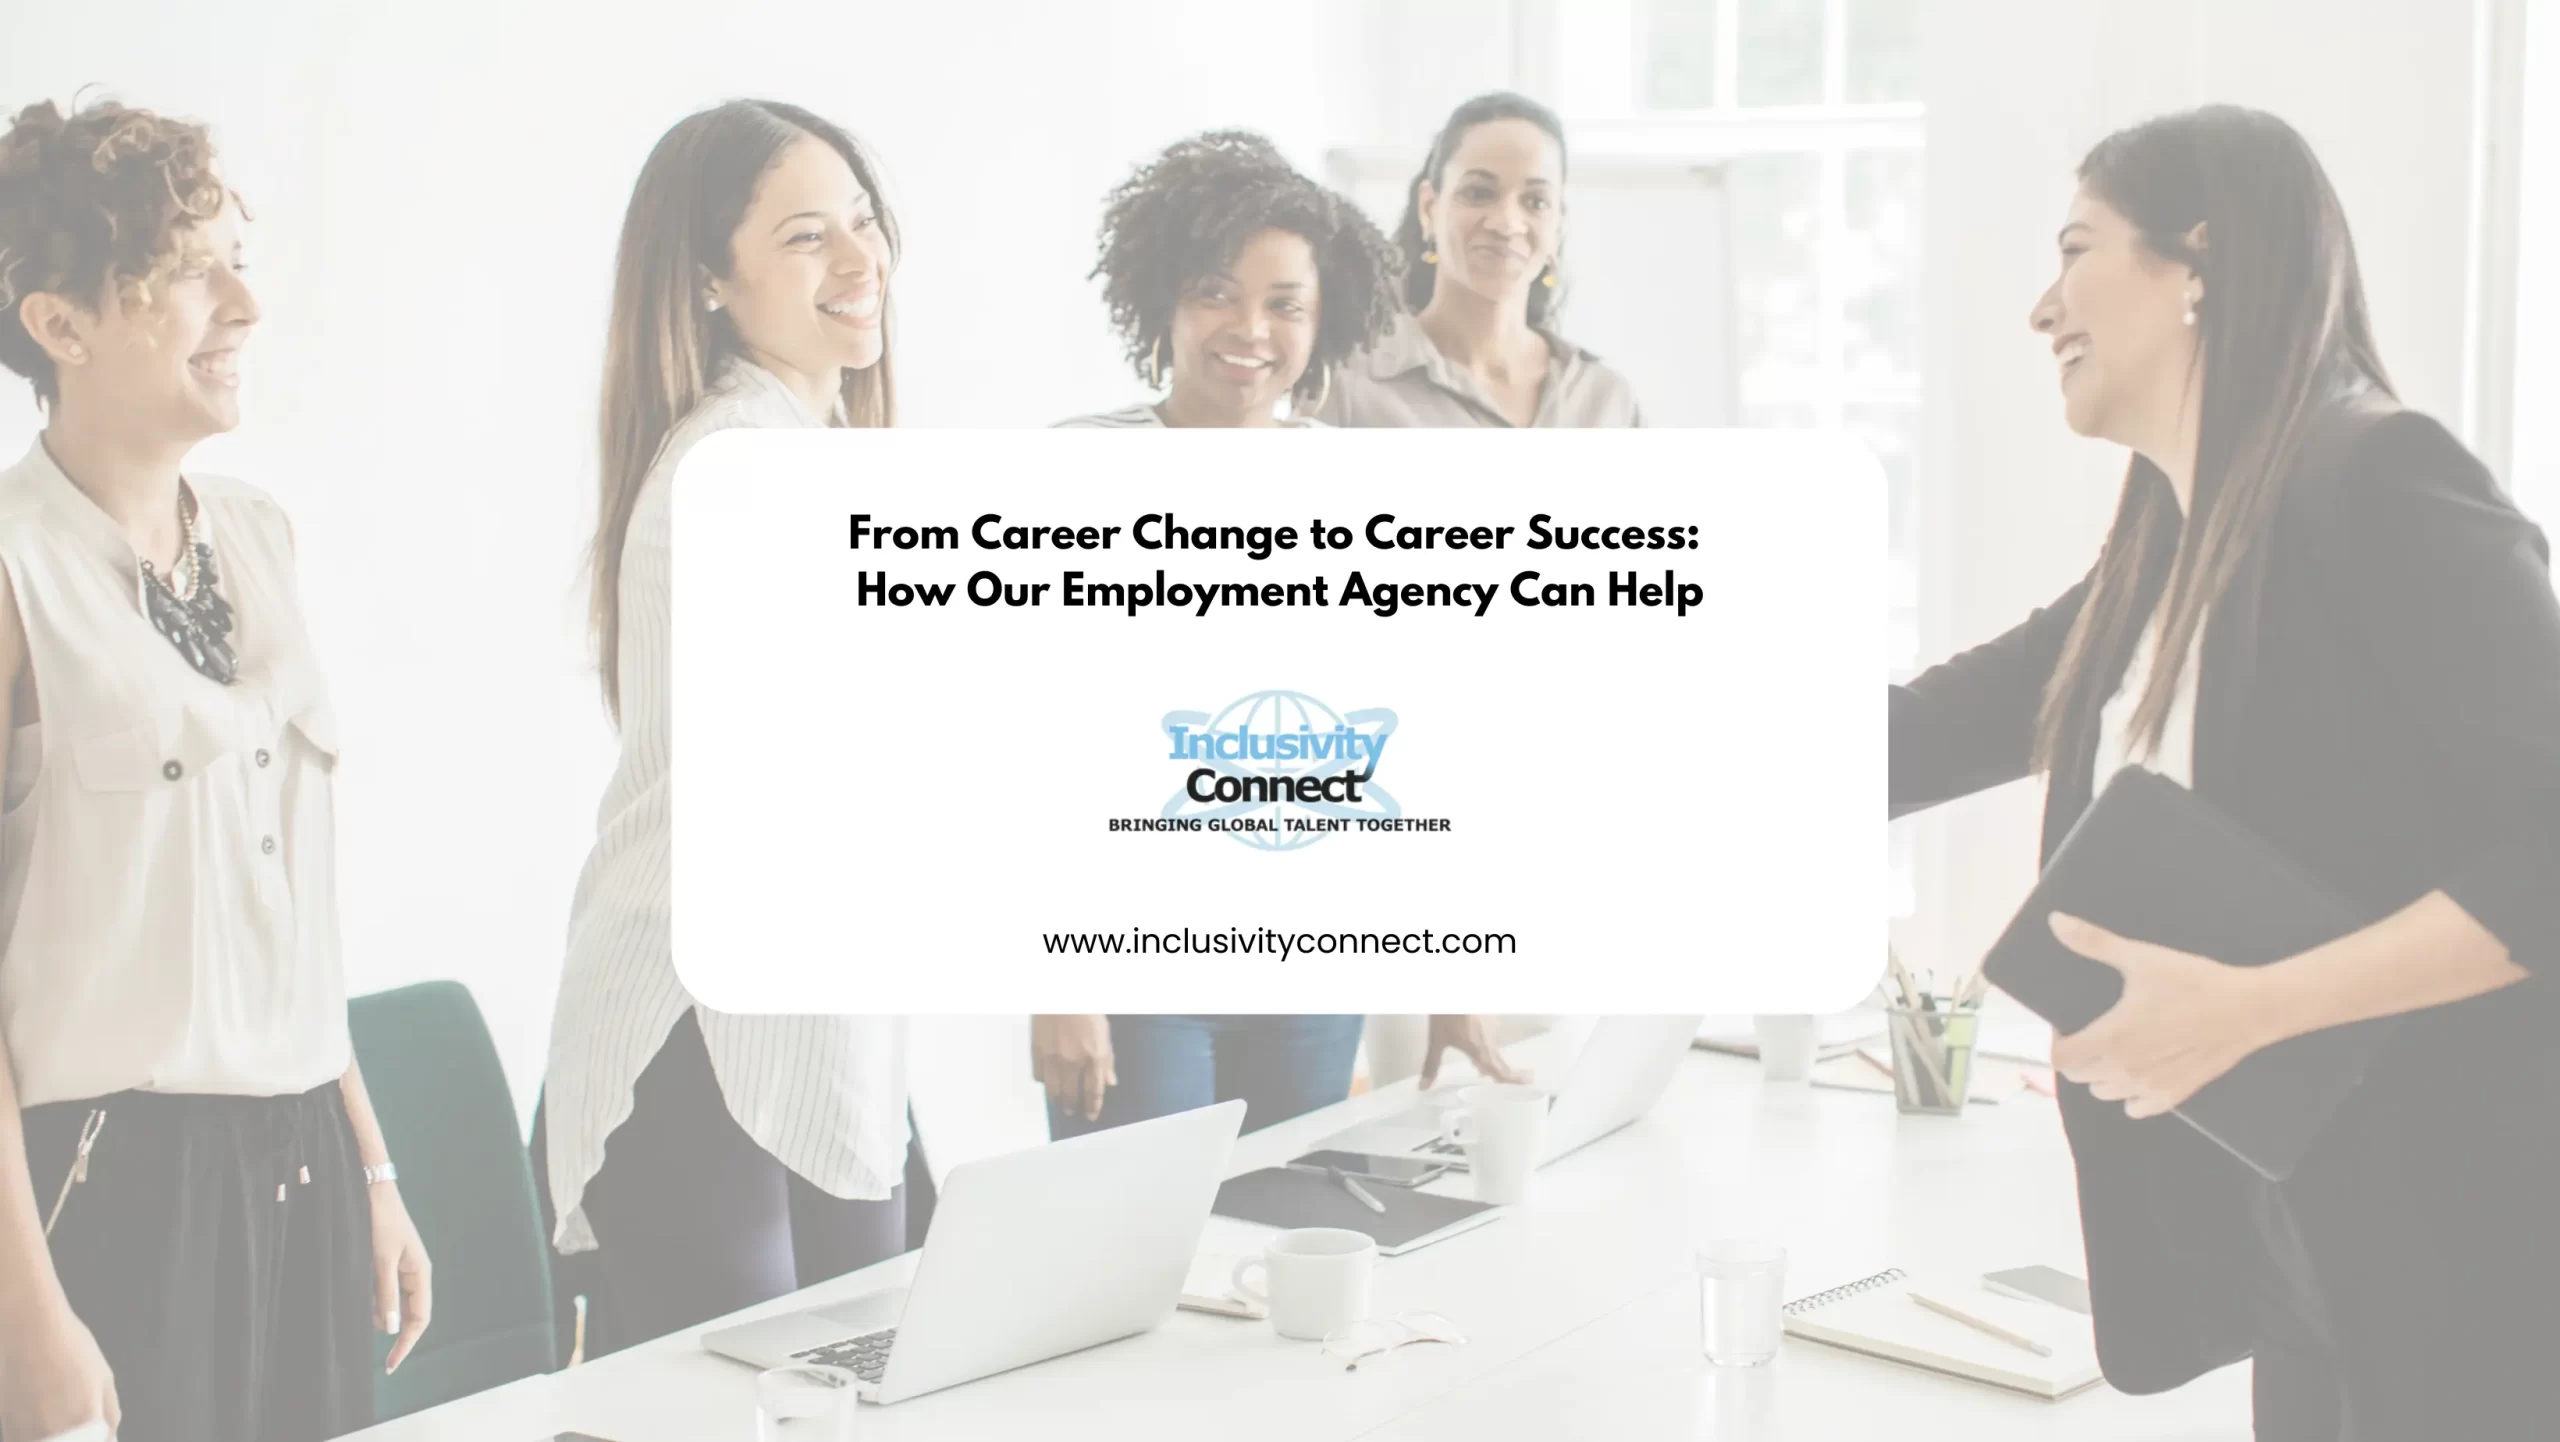 career-success